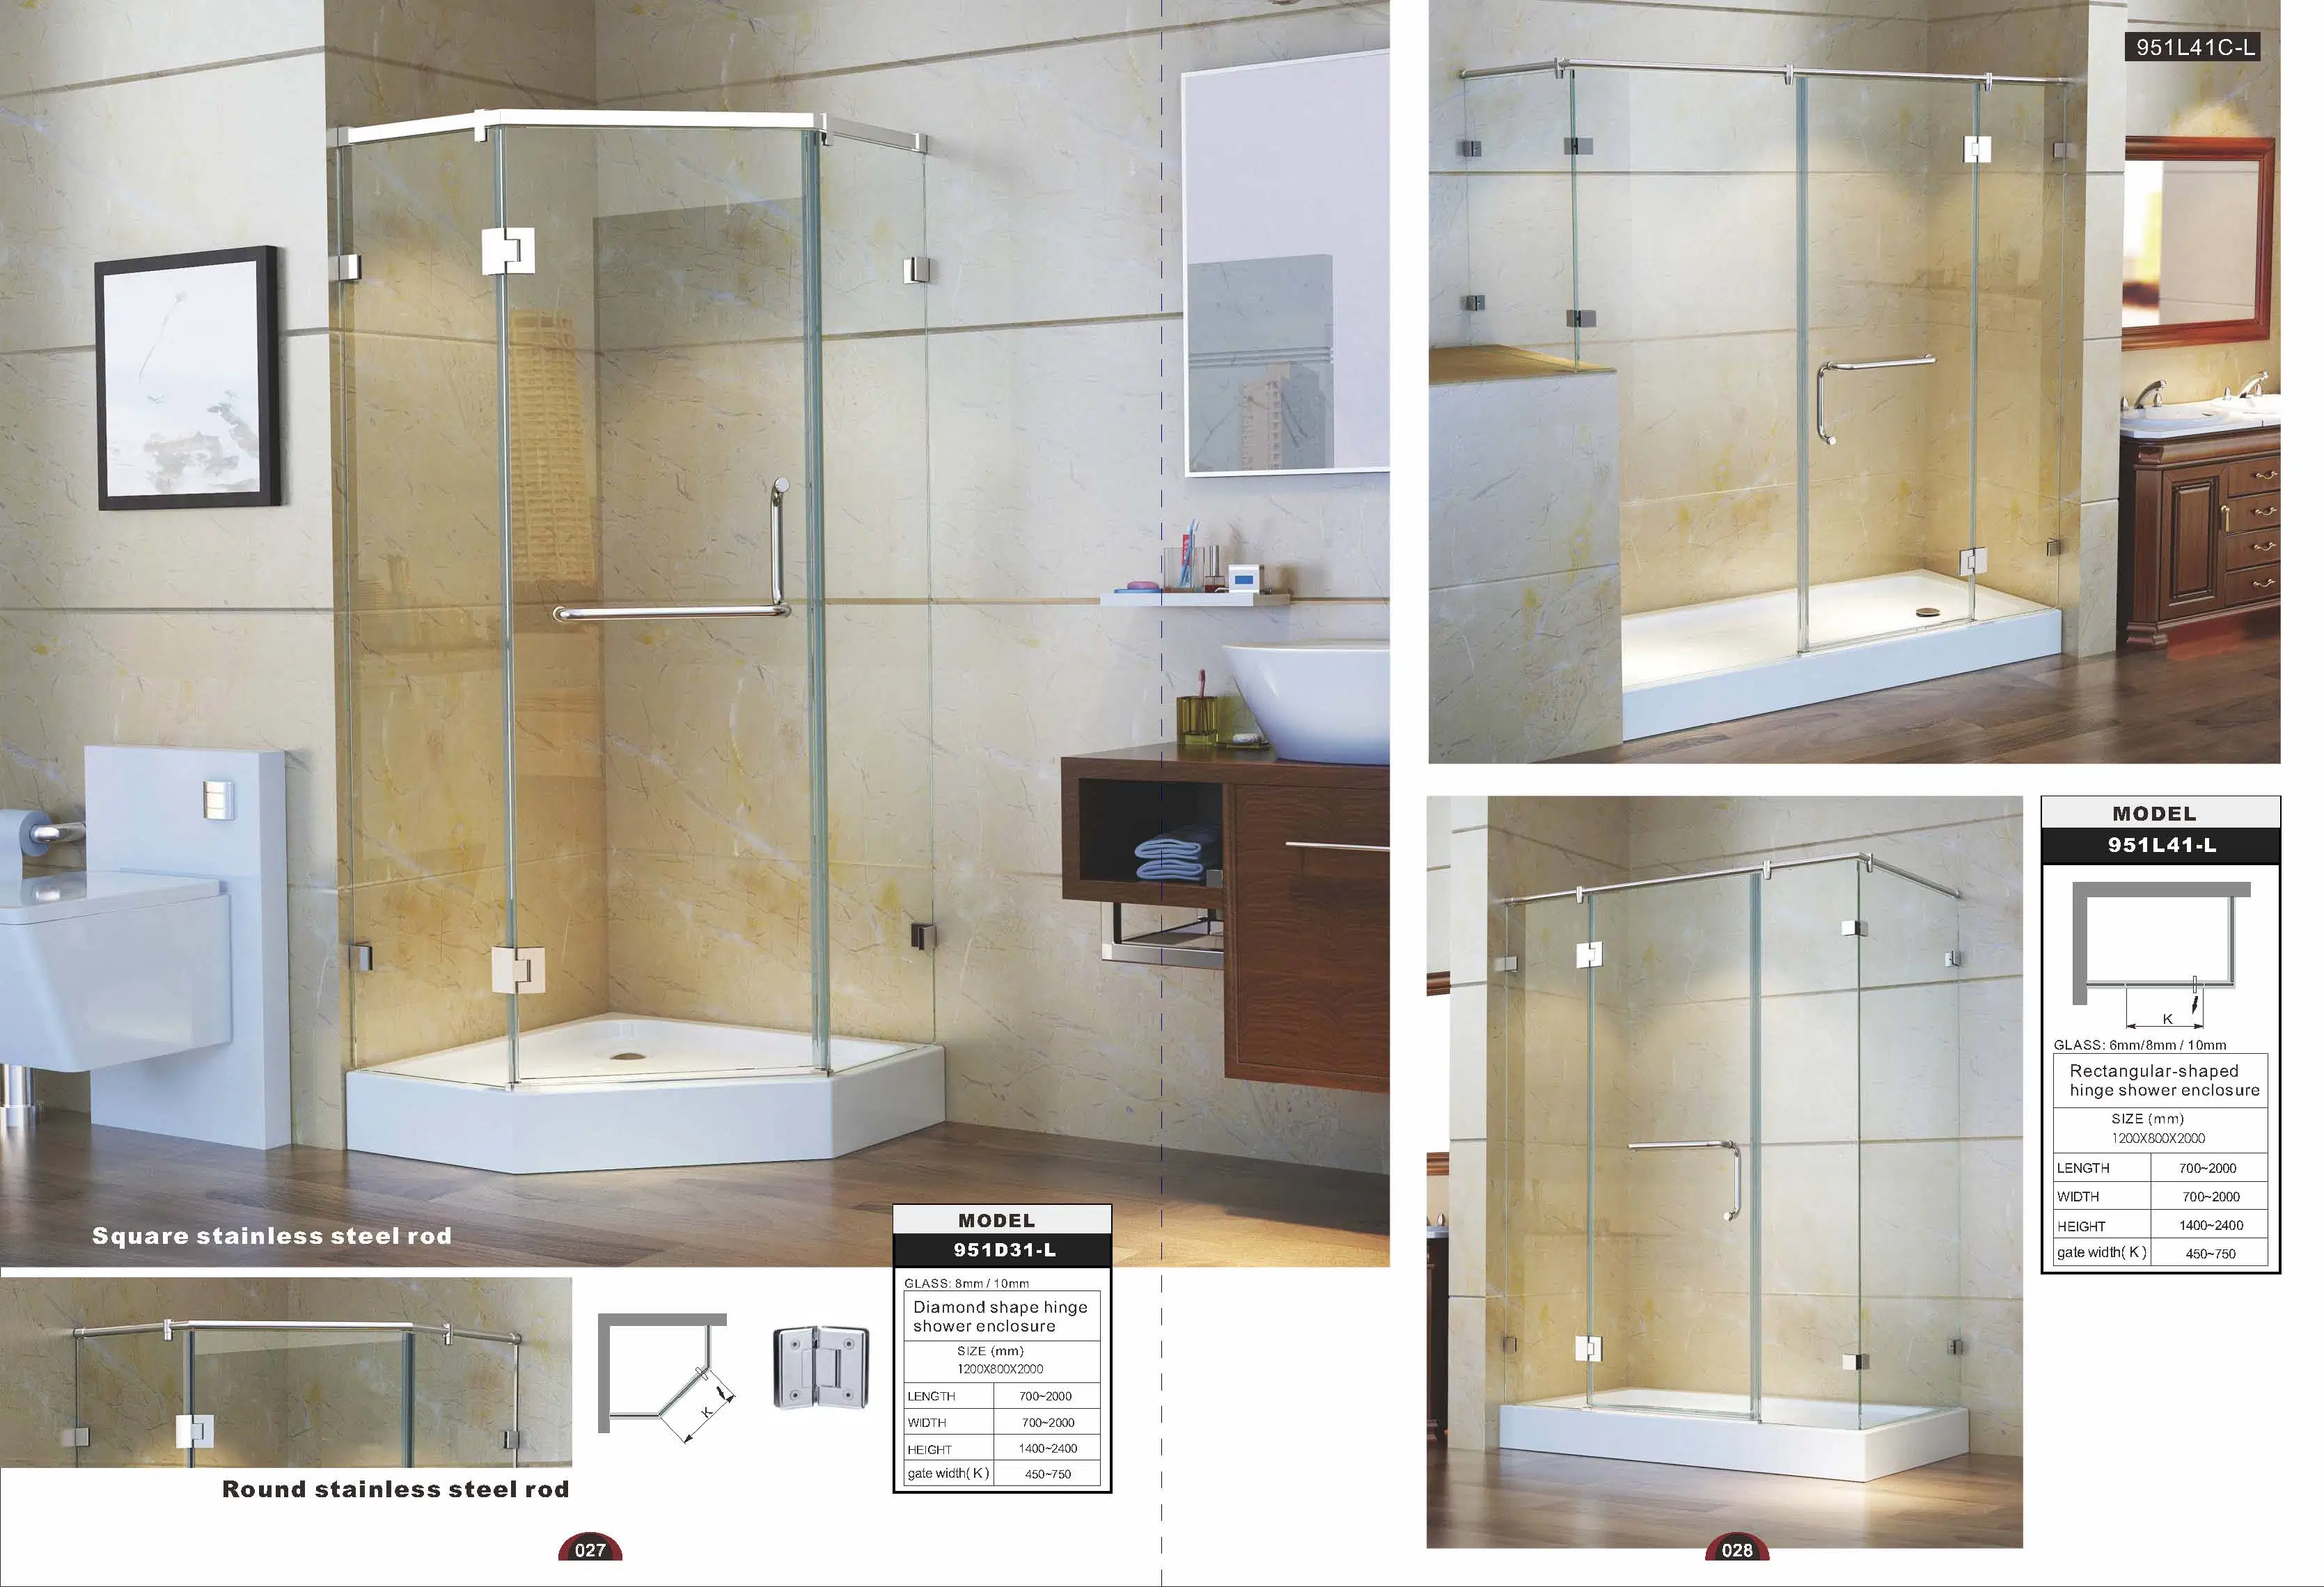 Straight Shape Hinges Opening Stainless Steel Hinges Door Shower Room Shower Enclosure Shower 151s42